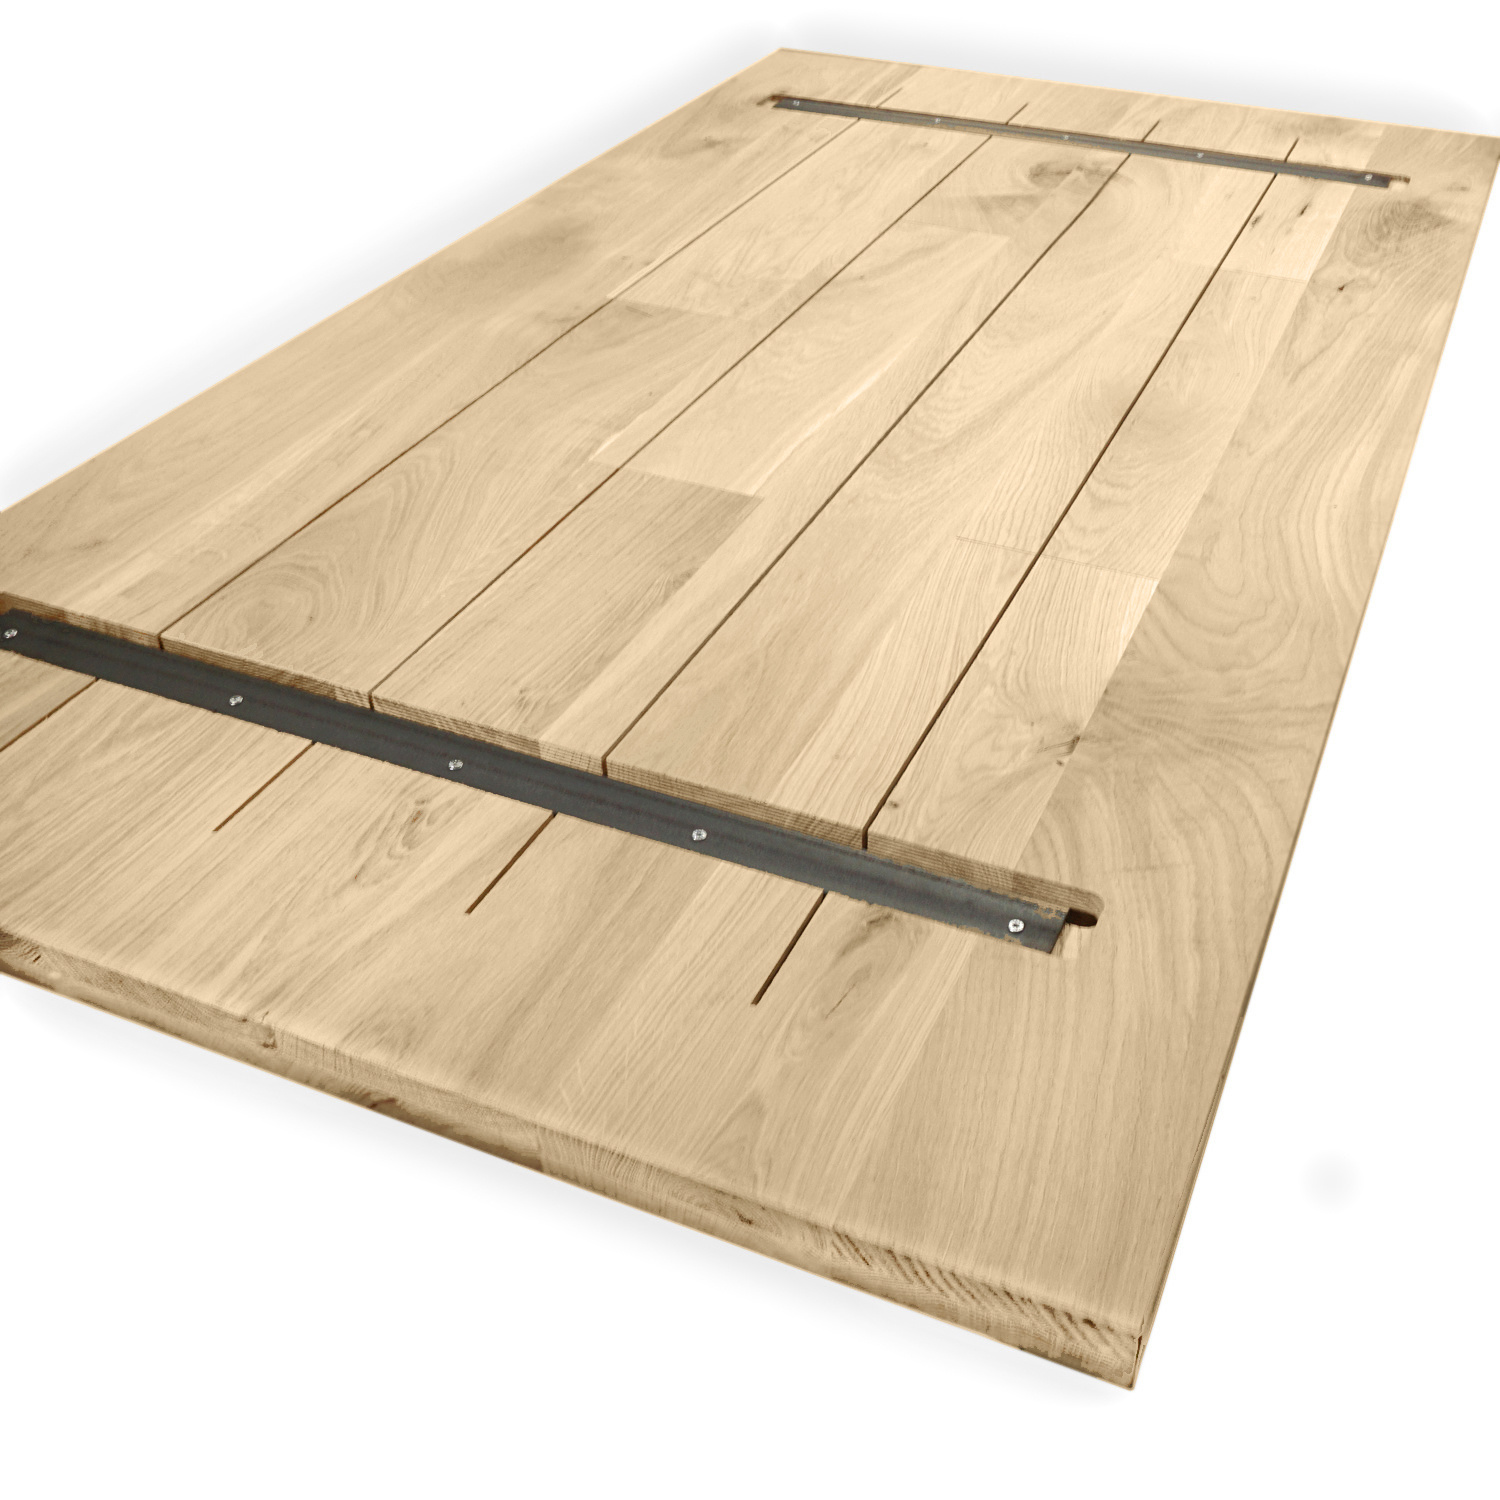  Eiken tafelblad op maat - 4 cm dik (2-laags) - foutvrij Europees eikenhout - verlijmd kd 8-12% - 50-120x50-350 cm